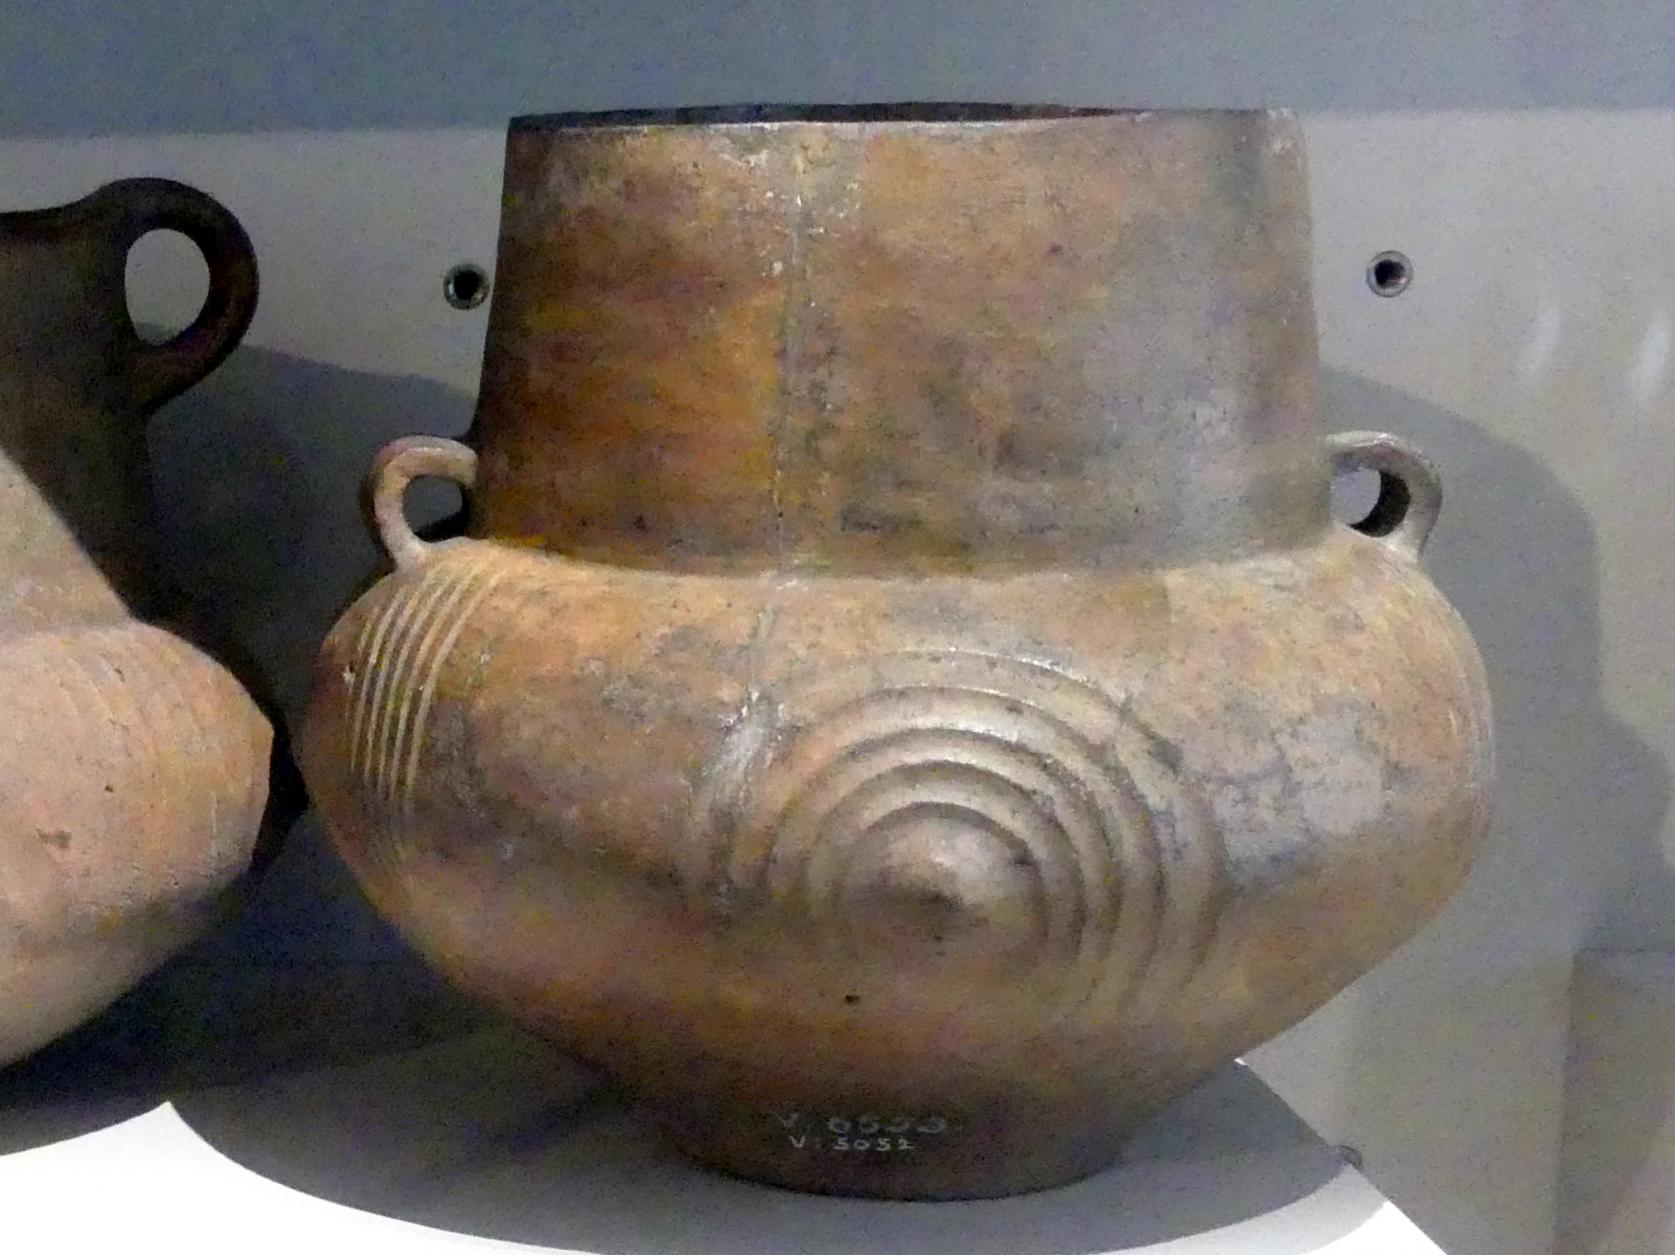 Topf, mit Kannelur, 1100 - 900 v. Chr., Bild 1/2